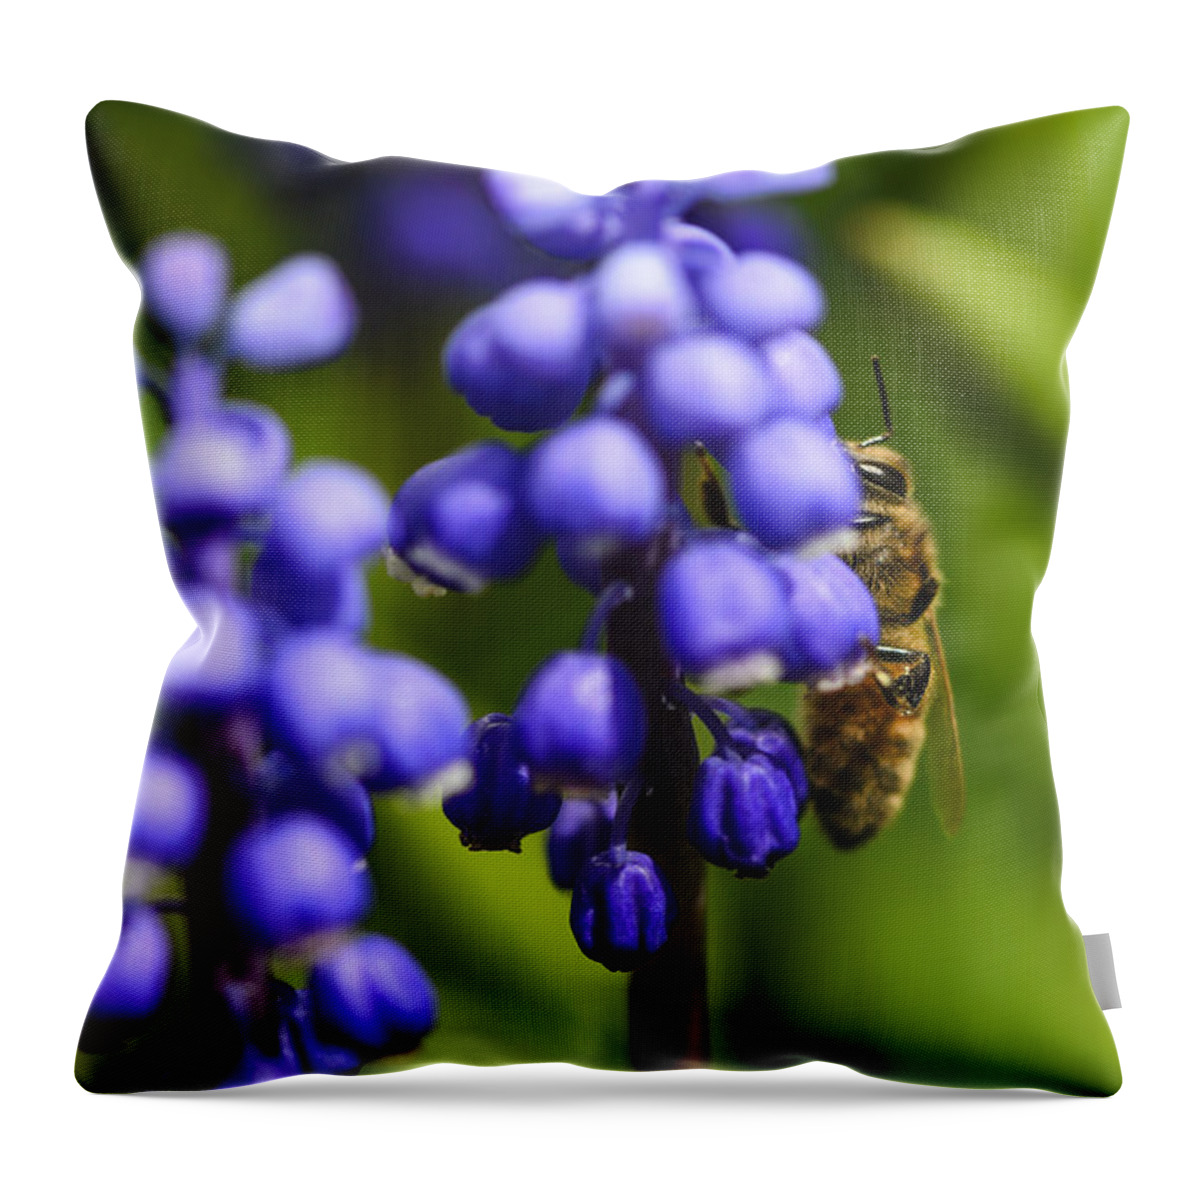 Grape Hyacinth Throw Pillow featuring the photograph Grape Hyacinth and Bee by Tamara Becker